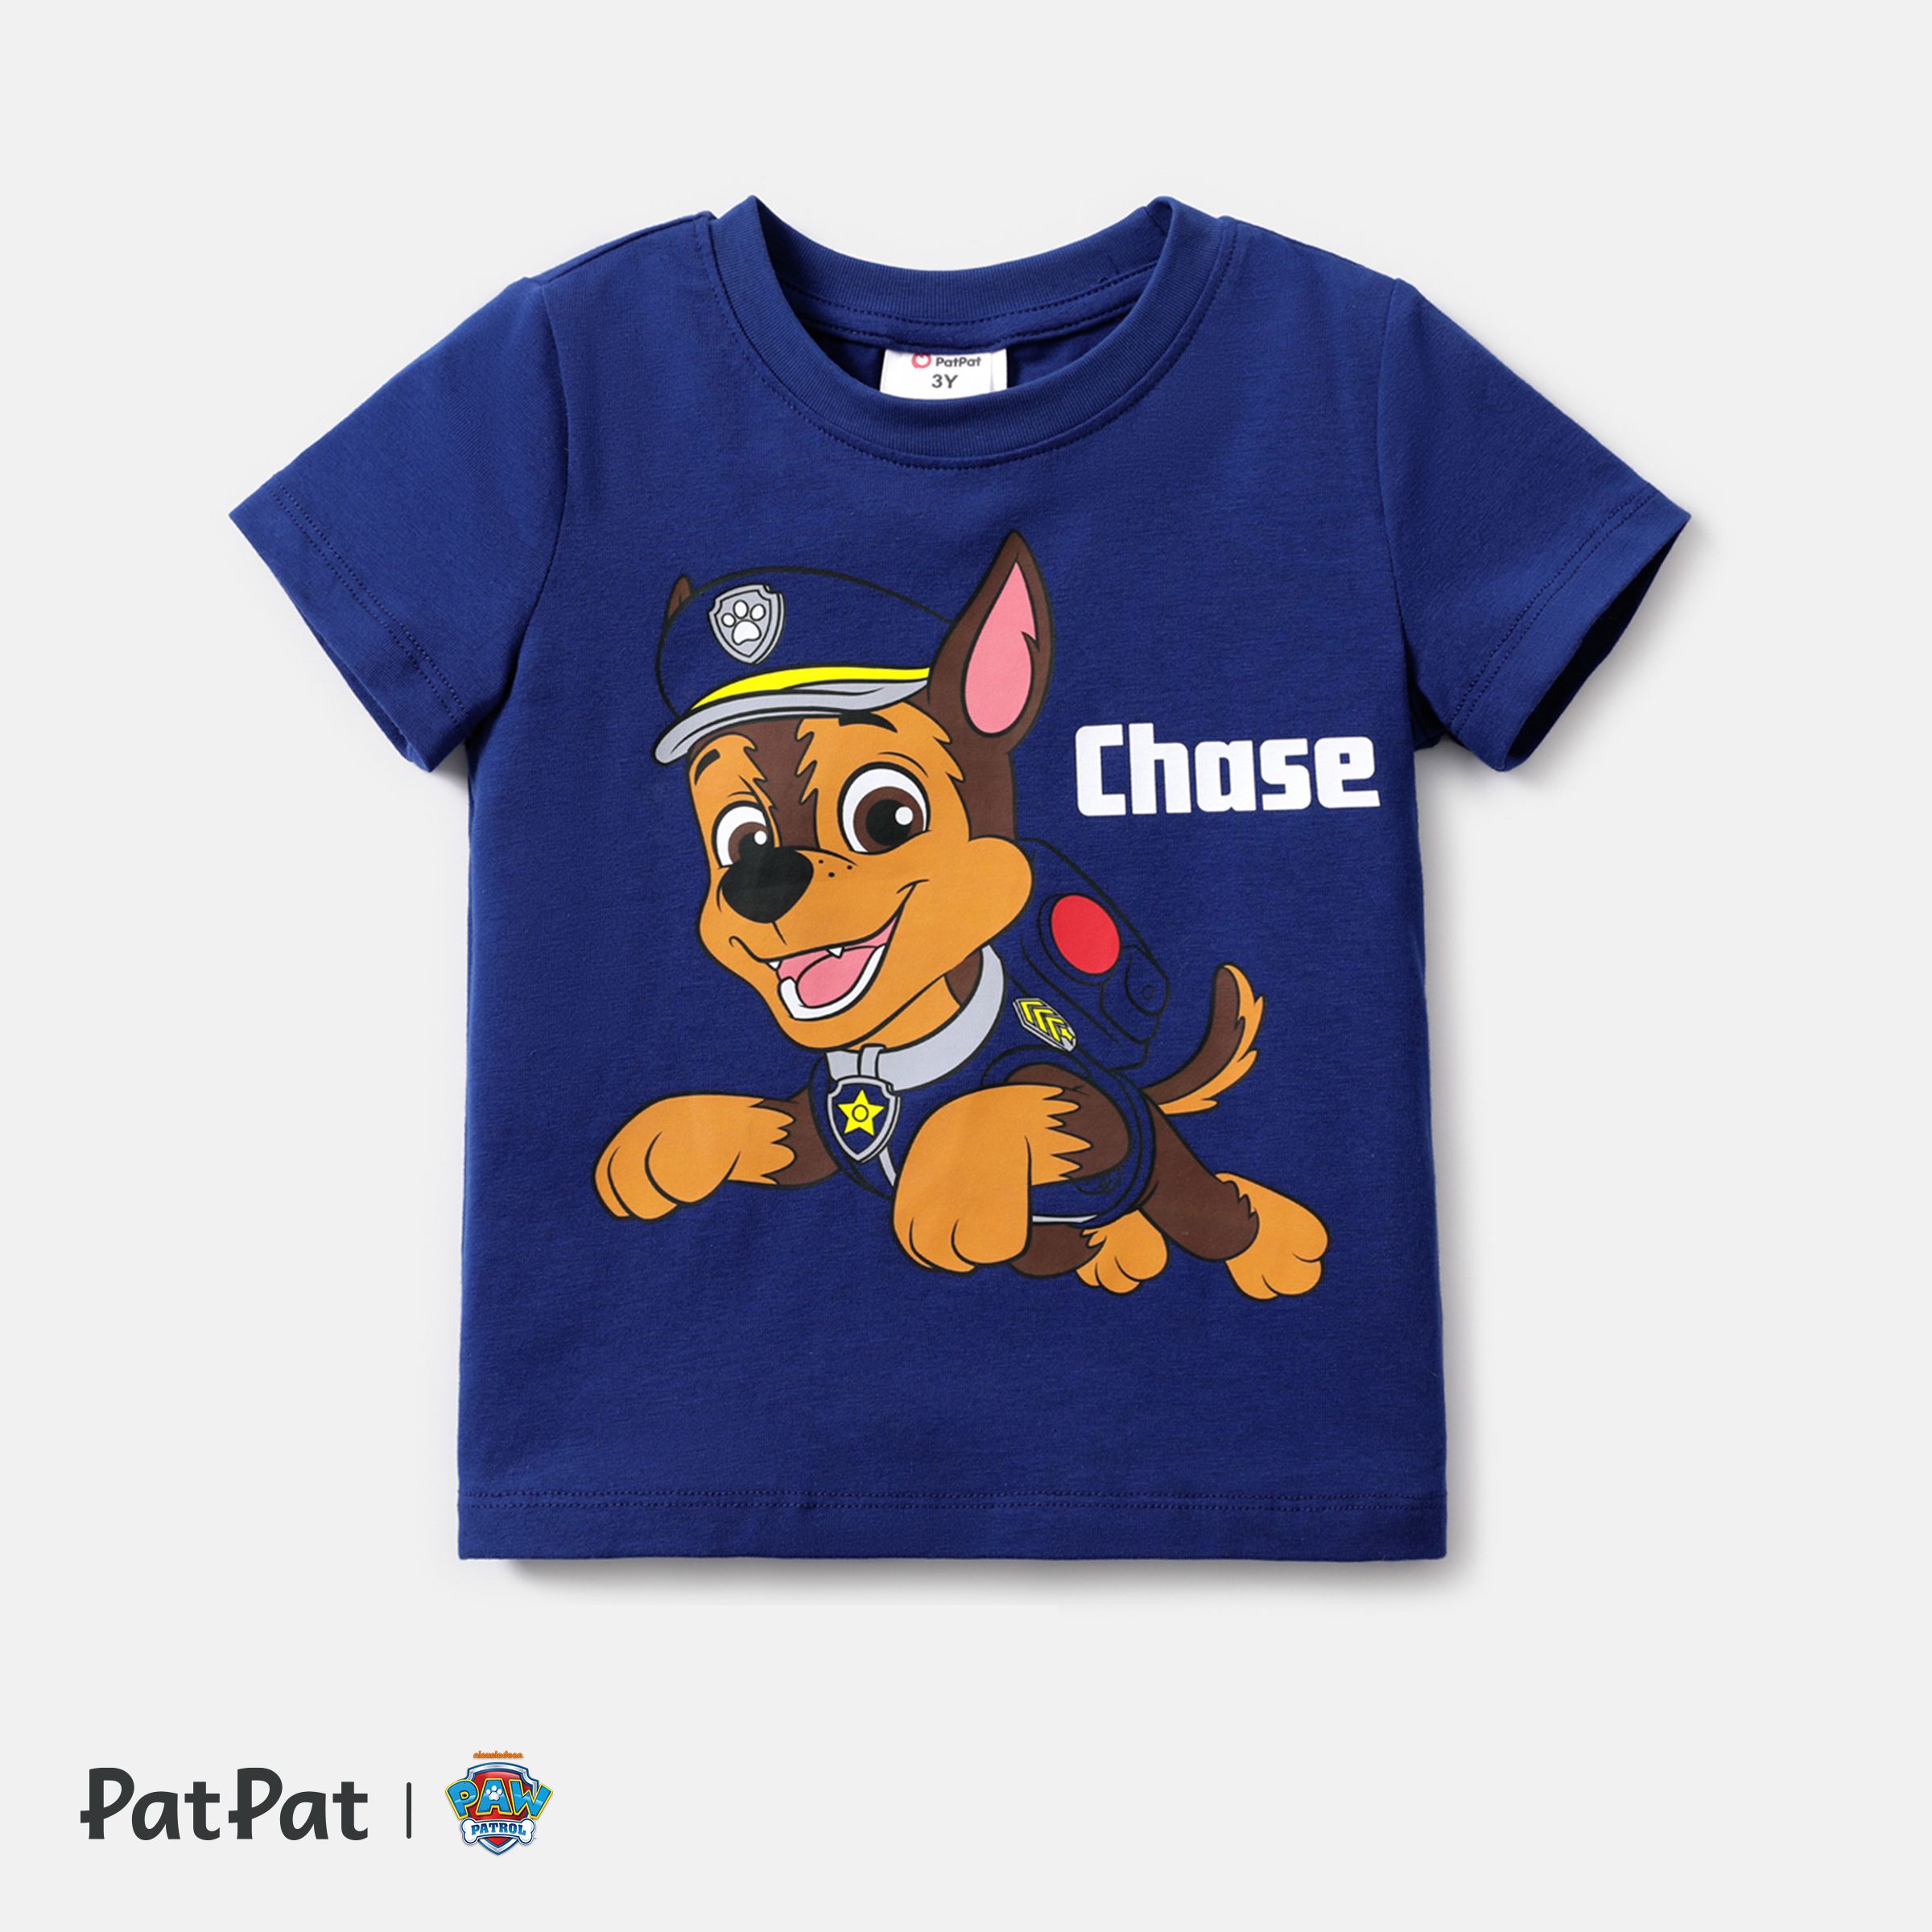 PAW Patrol 1pc  Toddler Girl/Boy Cute Character Print T-shirt